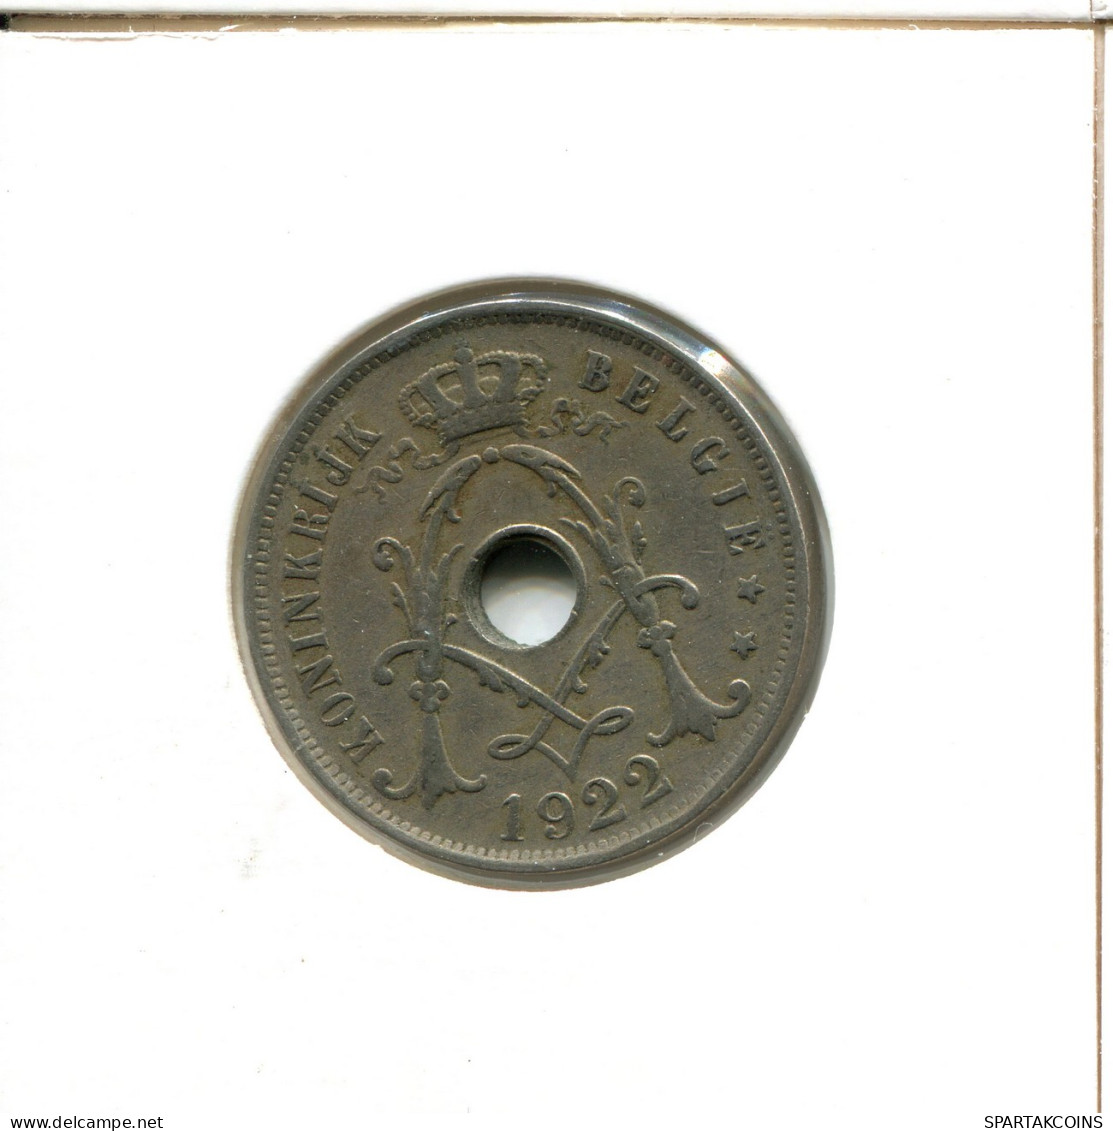 25 CENTIMES 1922 BELGIUM Coin DUTCH Text #AX404.U - 25 Cents